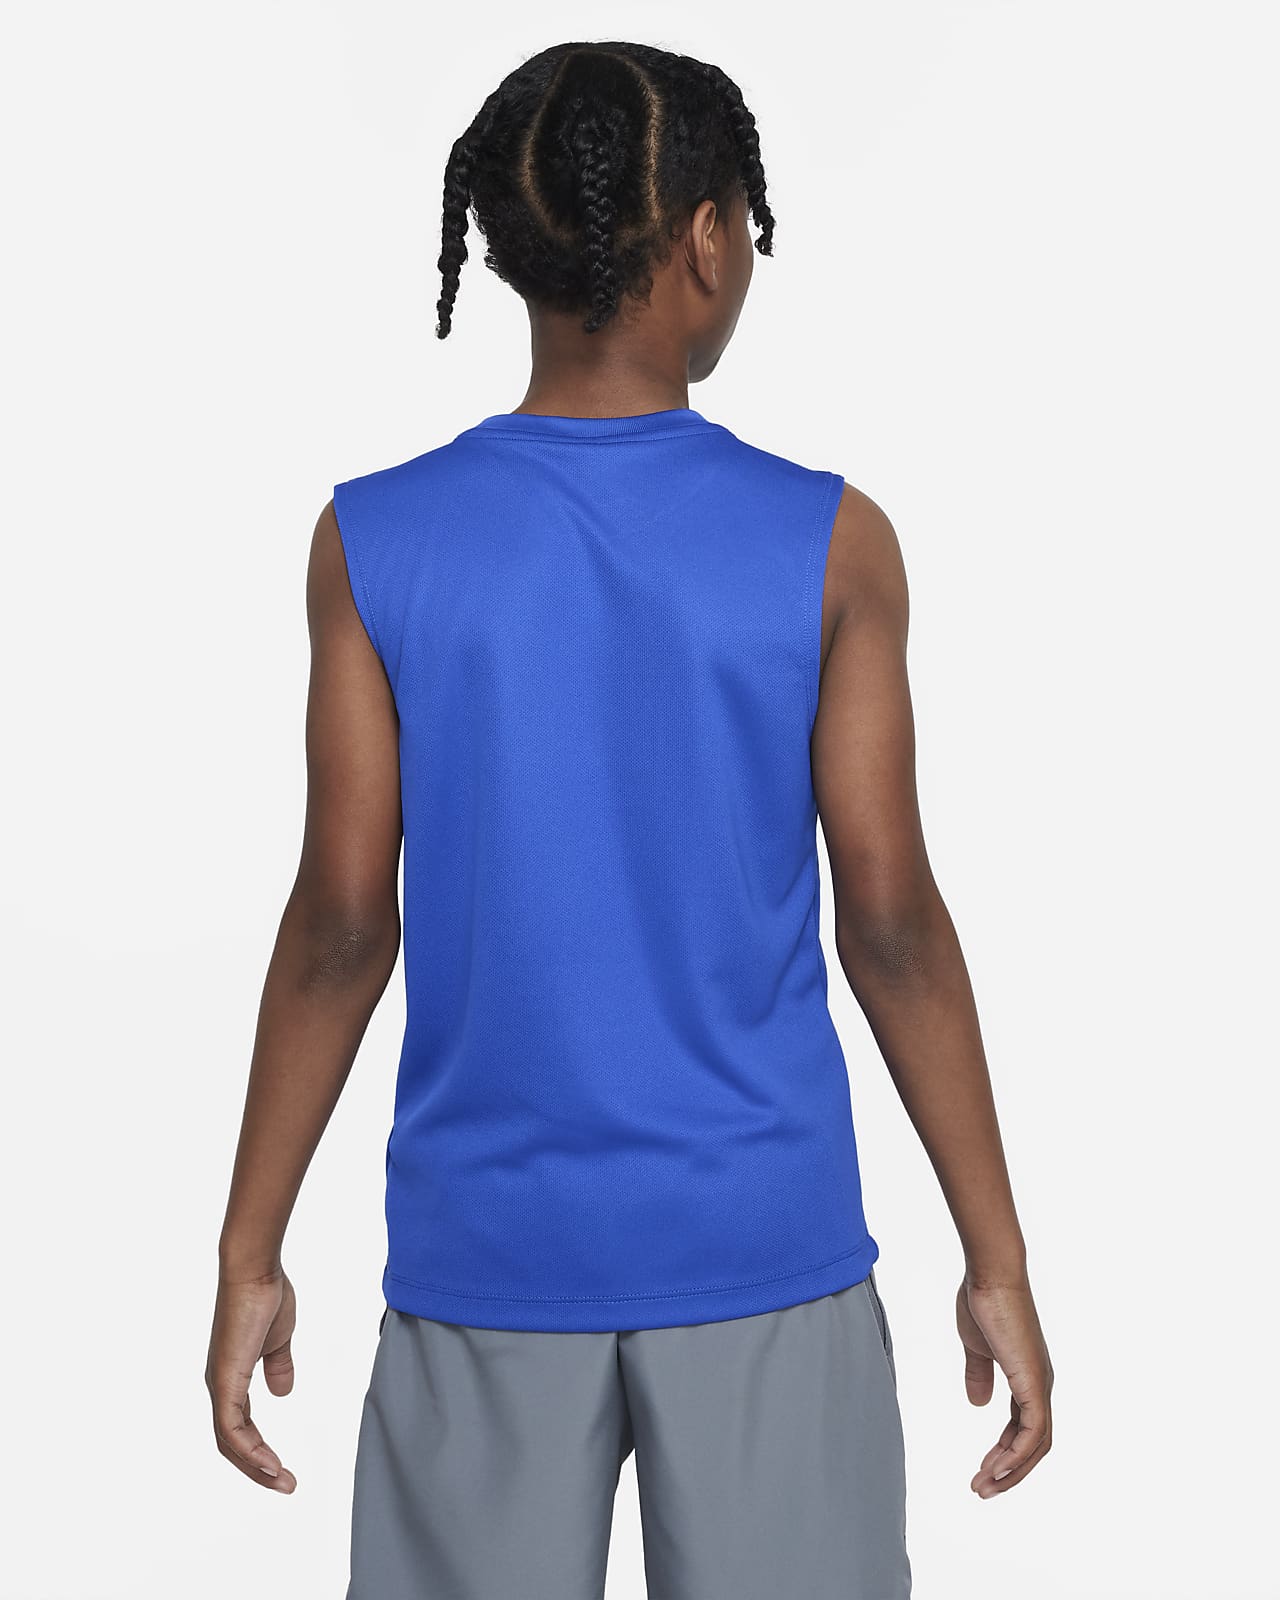 $25 - $50 Performance Yoga Tank Tops & Sleeveless Shirts.